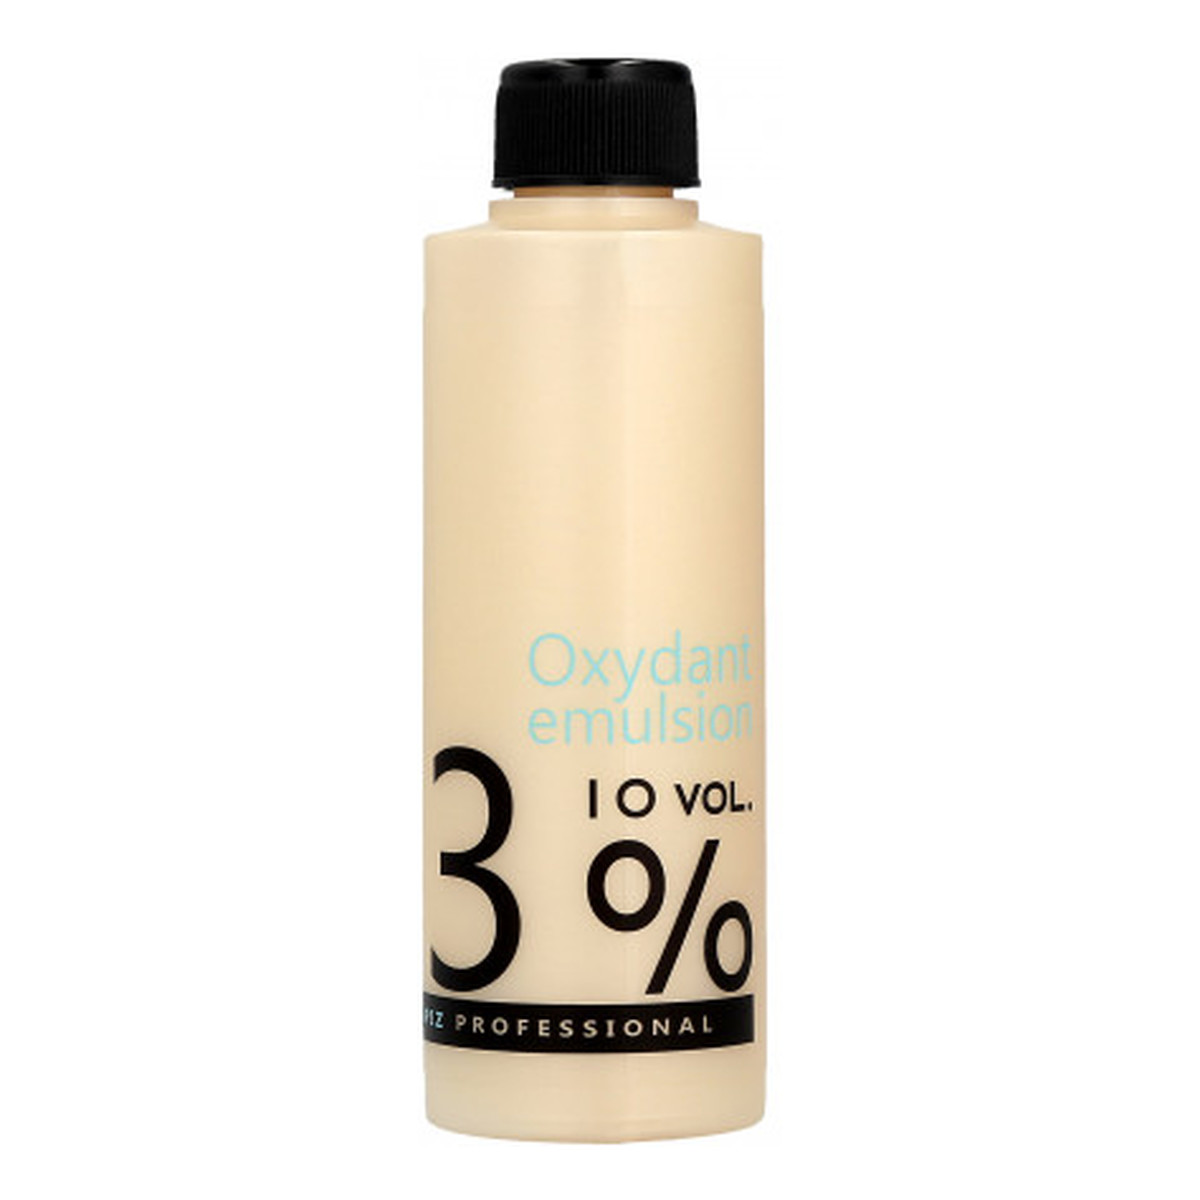 Stapiz Basic Salon Oxydant Emulsion Woda utleniona w kremie 3% 120ml